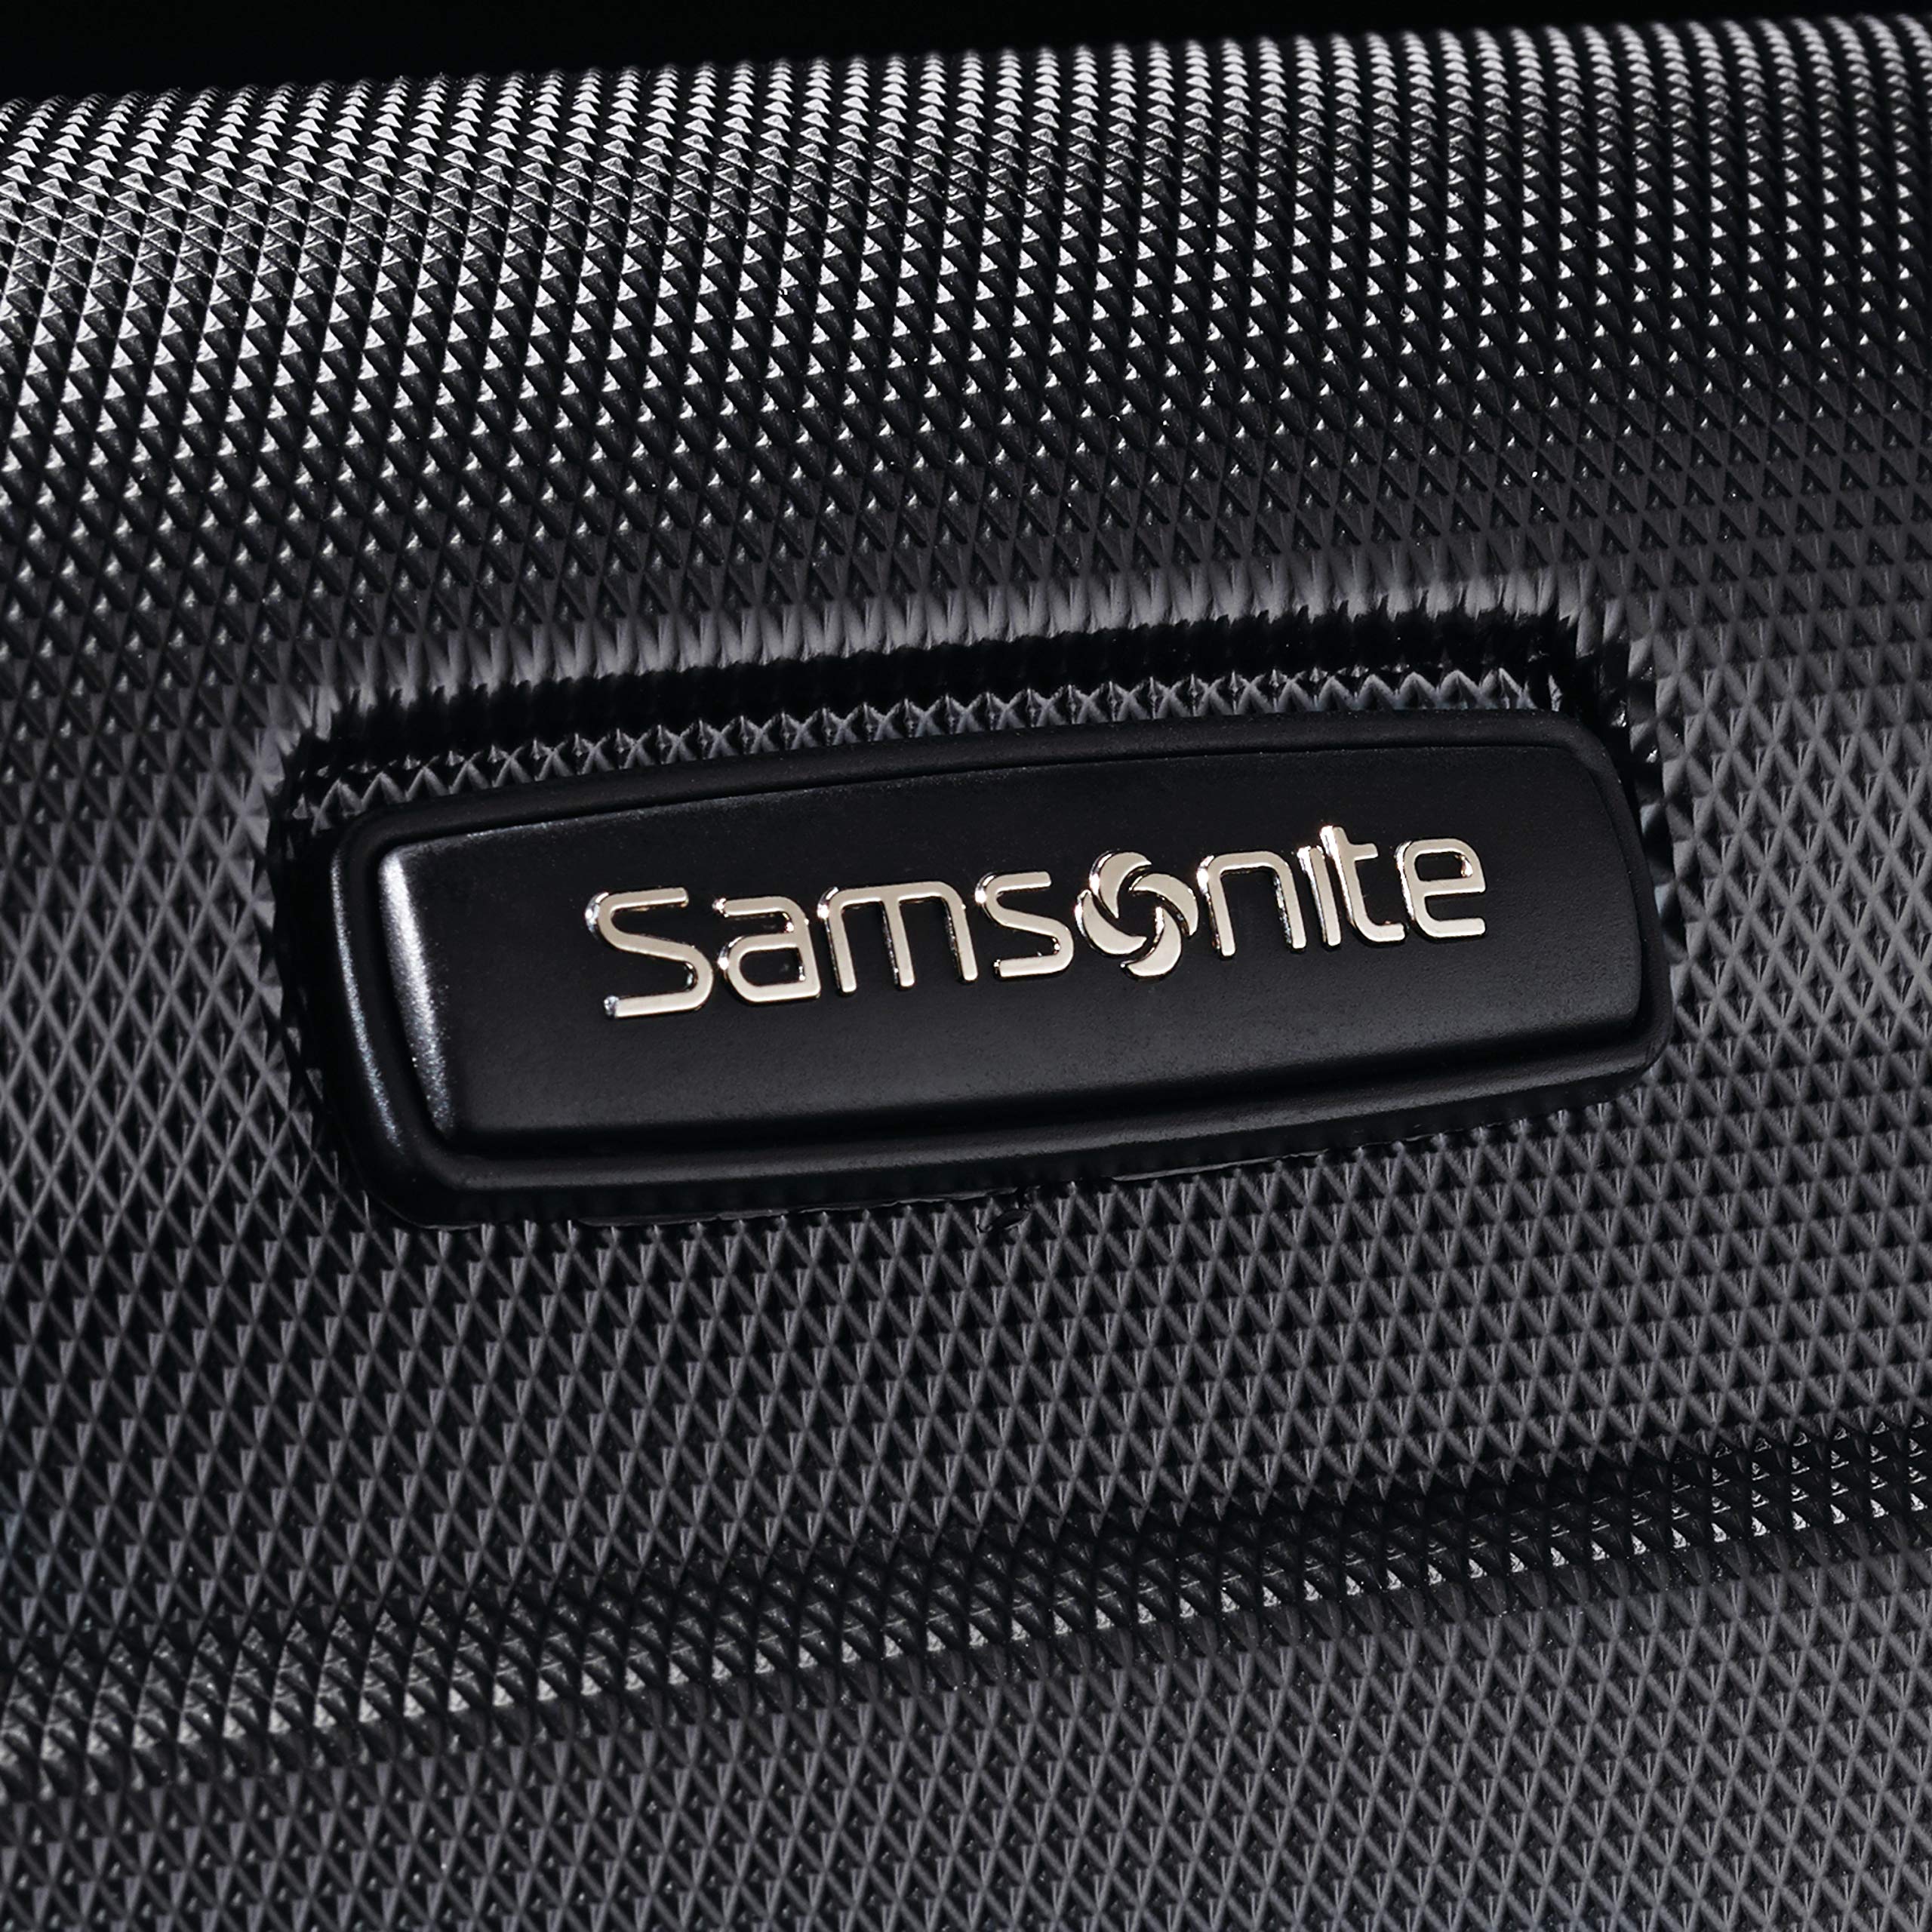 Samsonite Omni Pc Hardside Expandable Luggage with Spinner Wheels U7